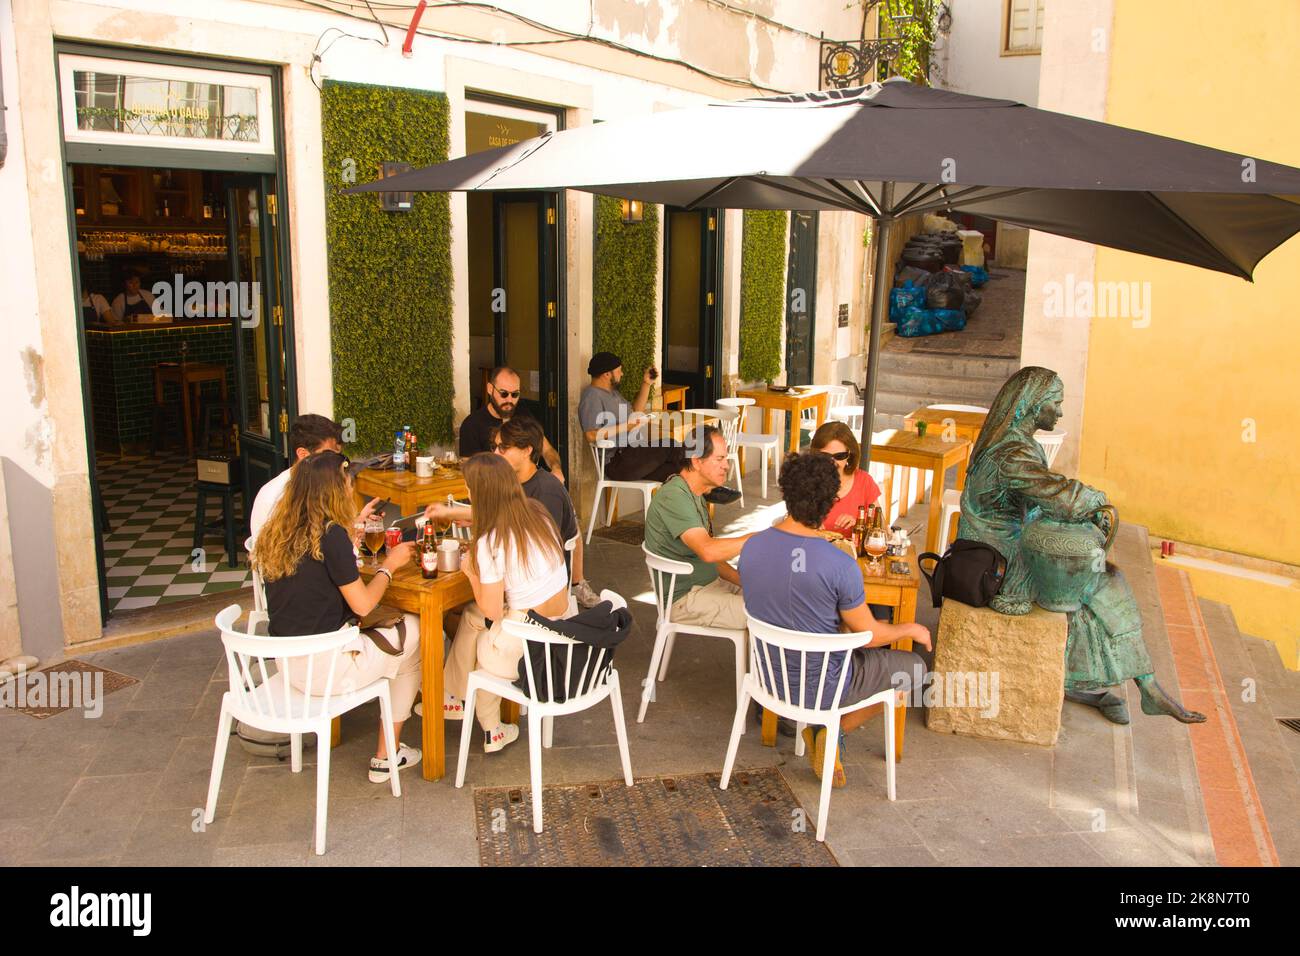 Portugal, Coimbra, cafe, people, street scene, Stock Photo